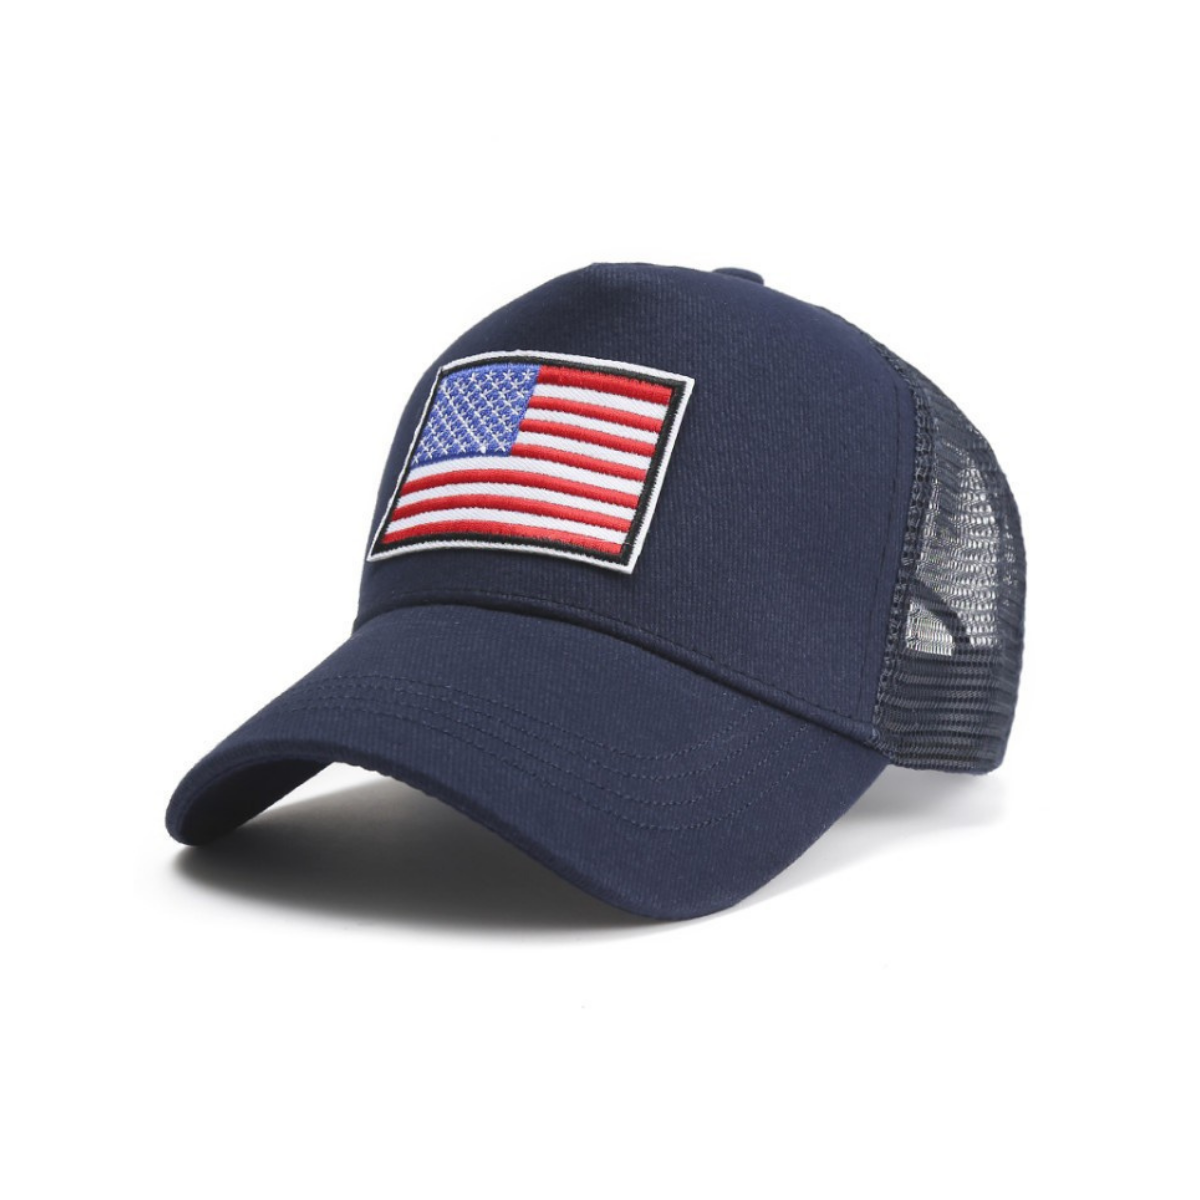 American Flag Trucker Hat with Adjustable Strap, Goodies N Stuff